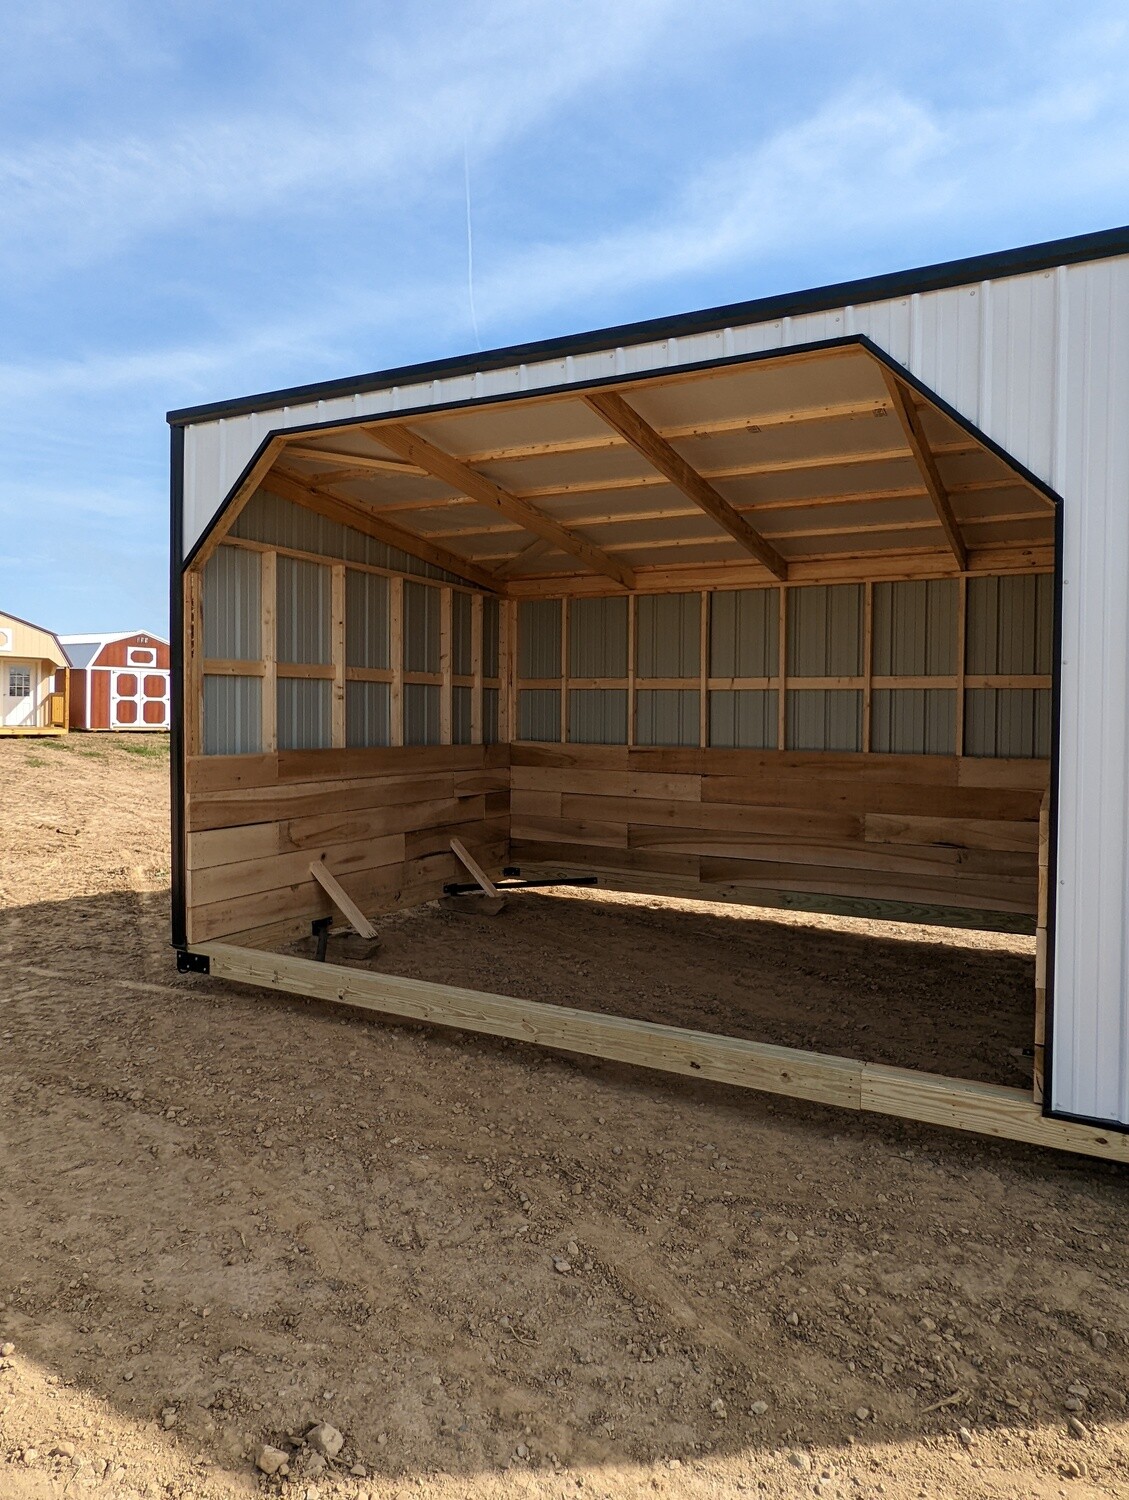 8' X 16' Horse Run-In Structures - Home - Farm Equipment, Steel Buildings,  Fixtures, Tools, Saunas, & More